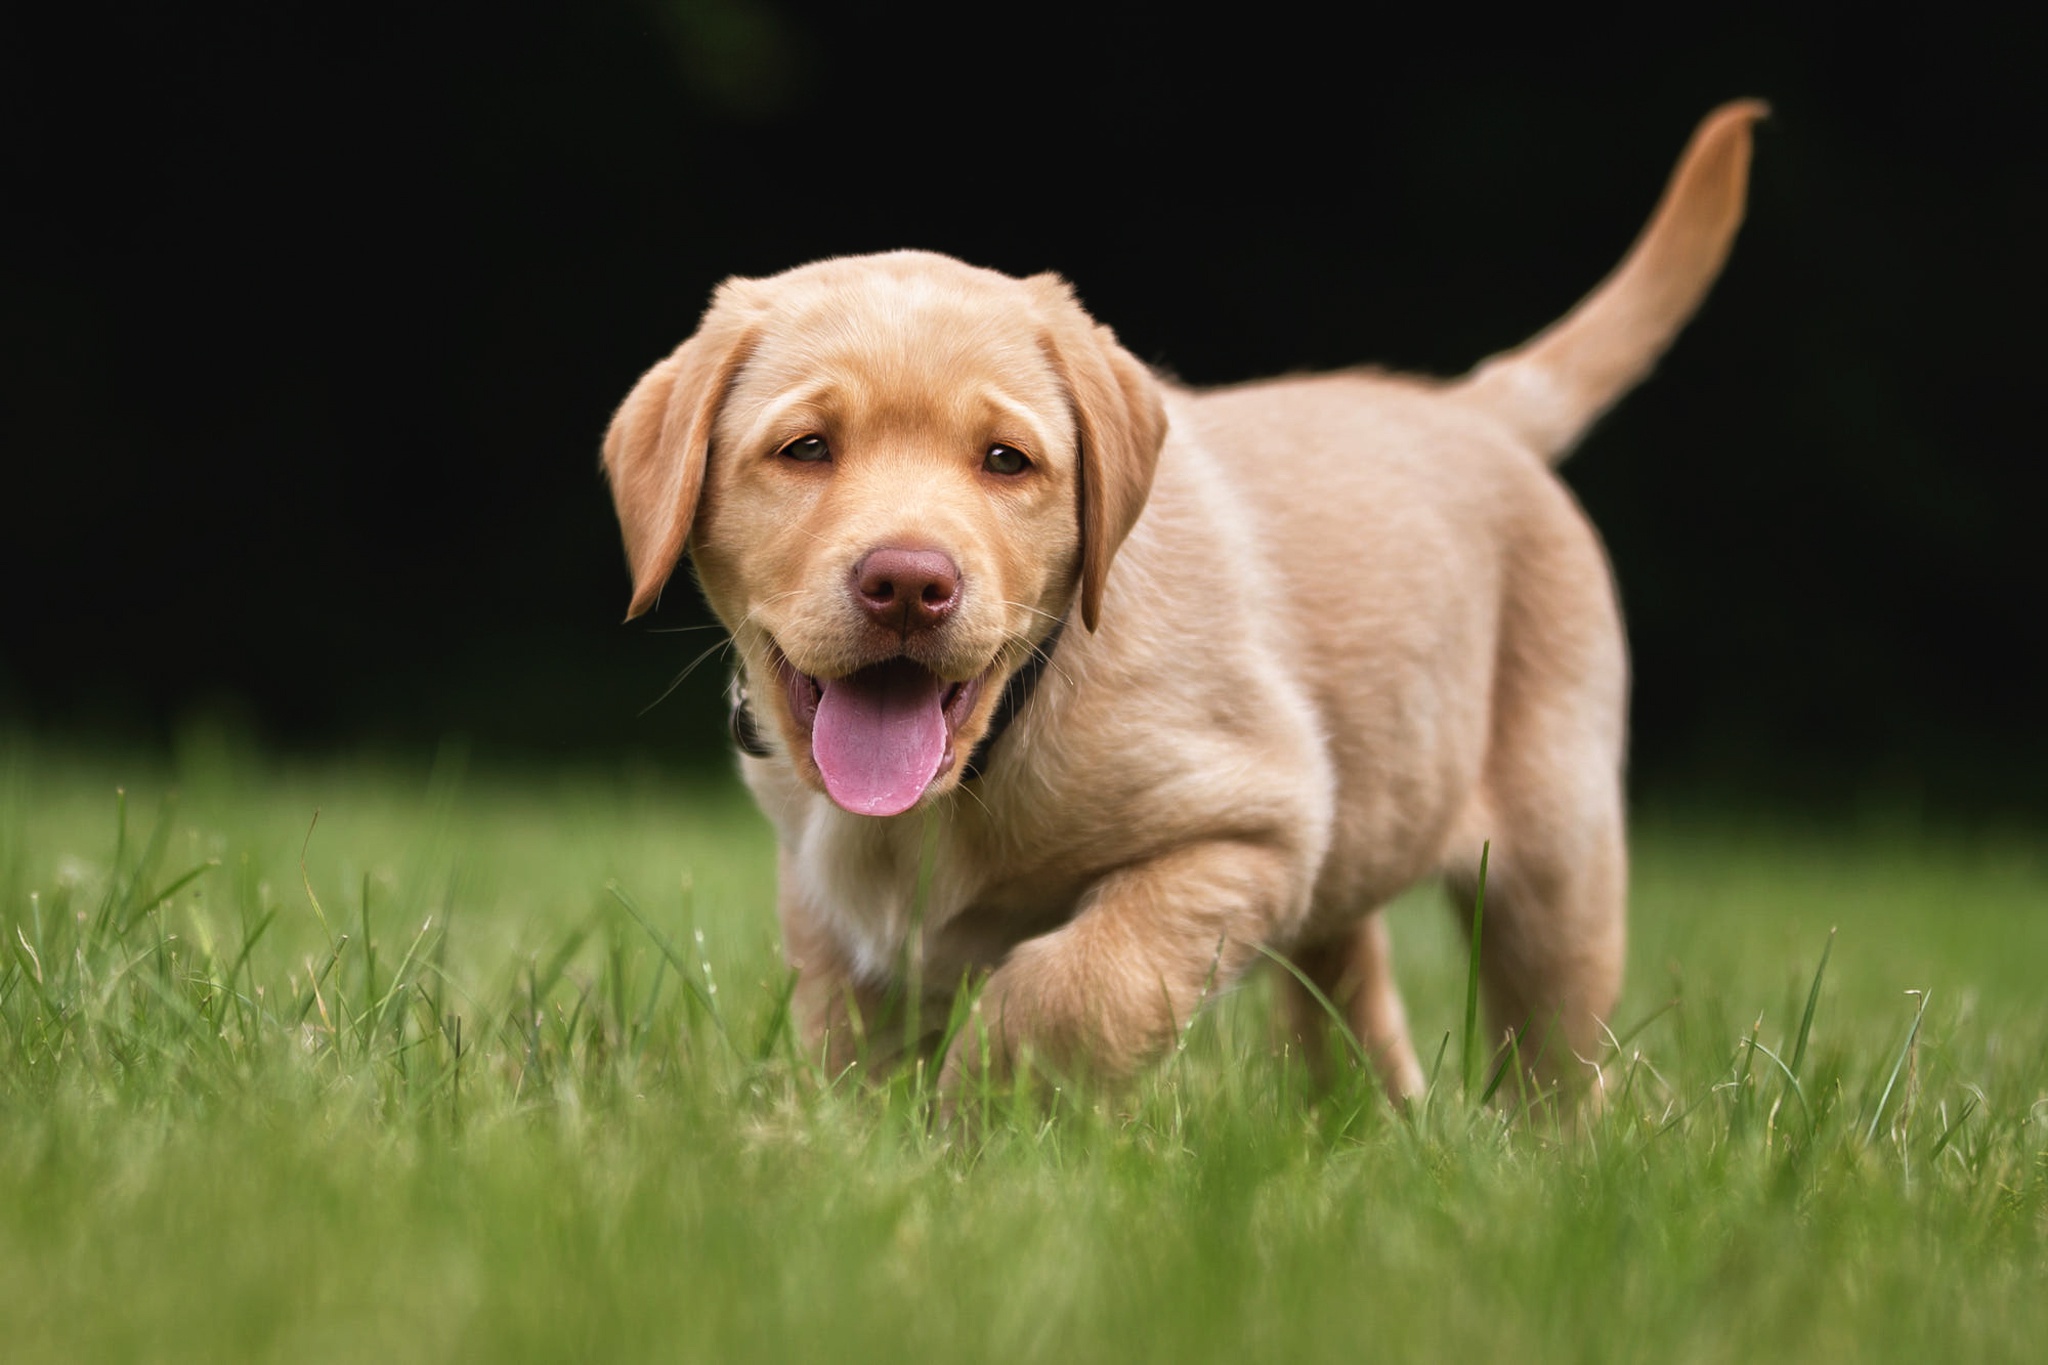 Baby Animal Dog Golden Retriever Pet Puppy 2048x1365